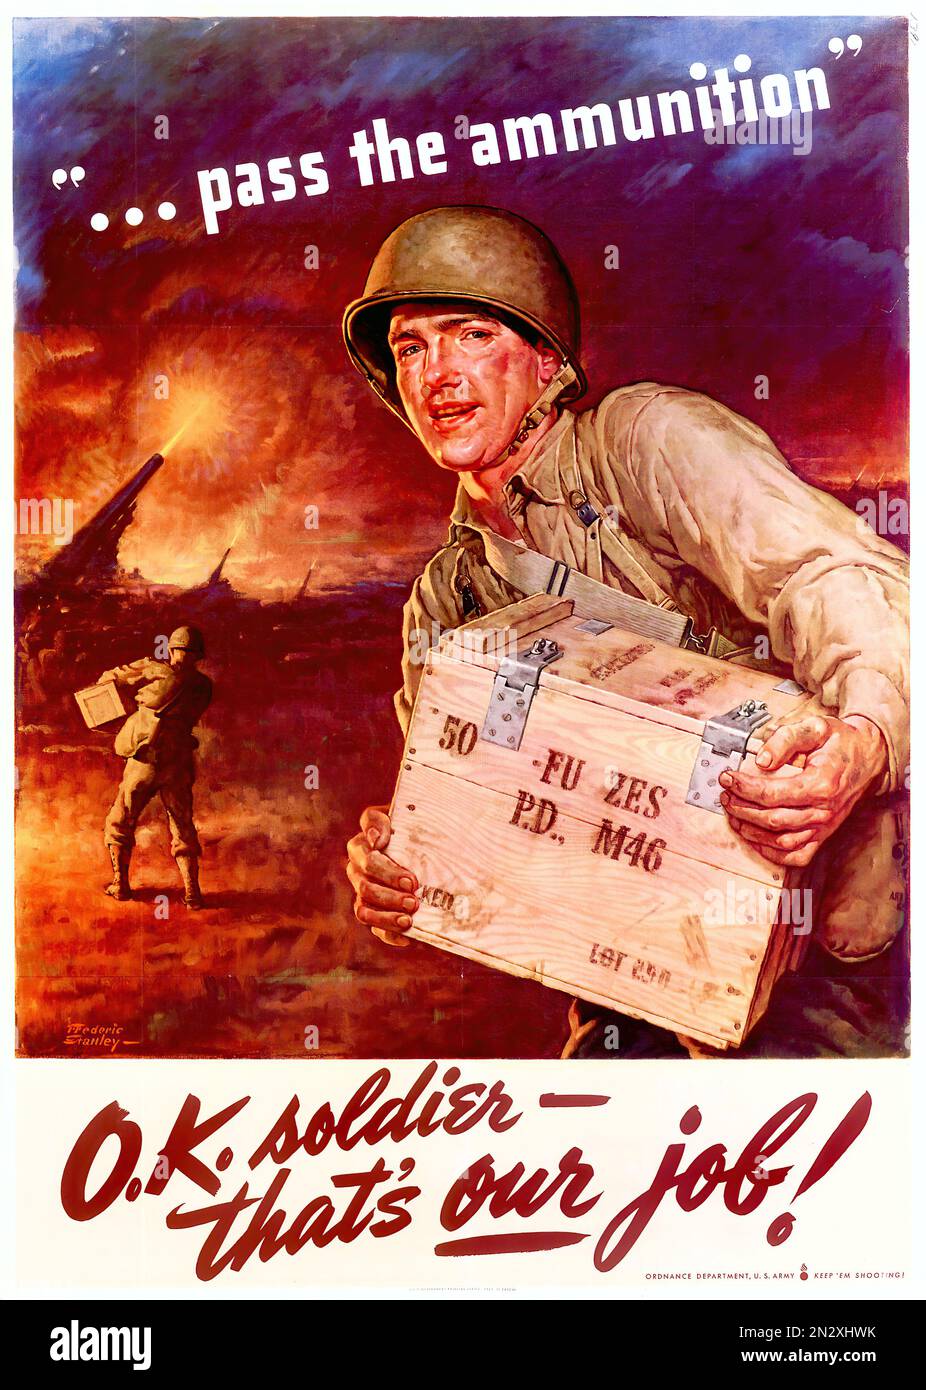 1943   pass the ammunition! - World War II - U.S propaganda Poster Stock Photo